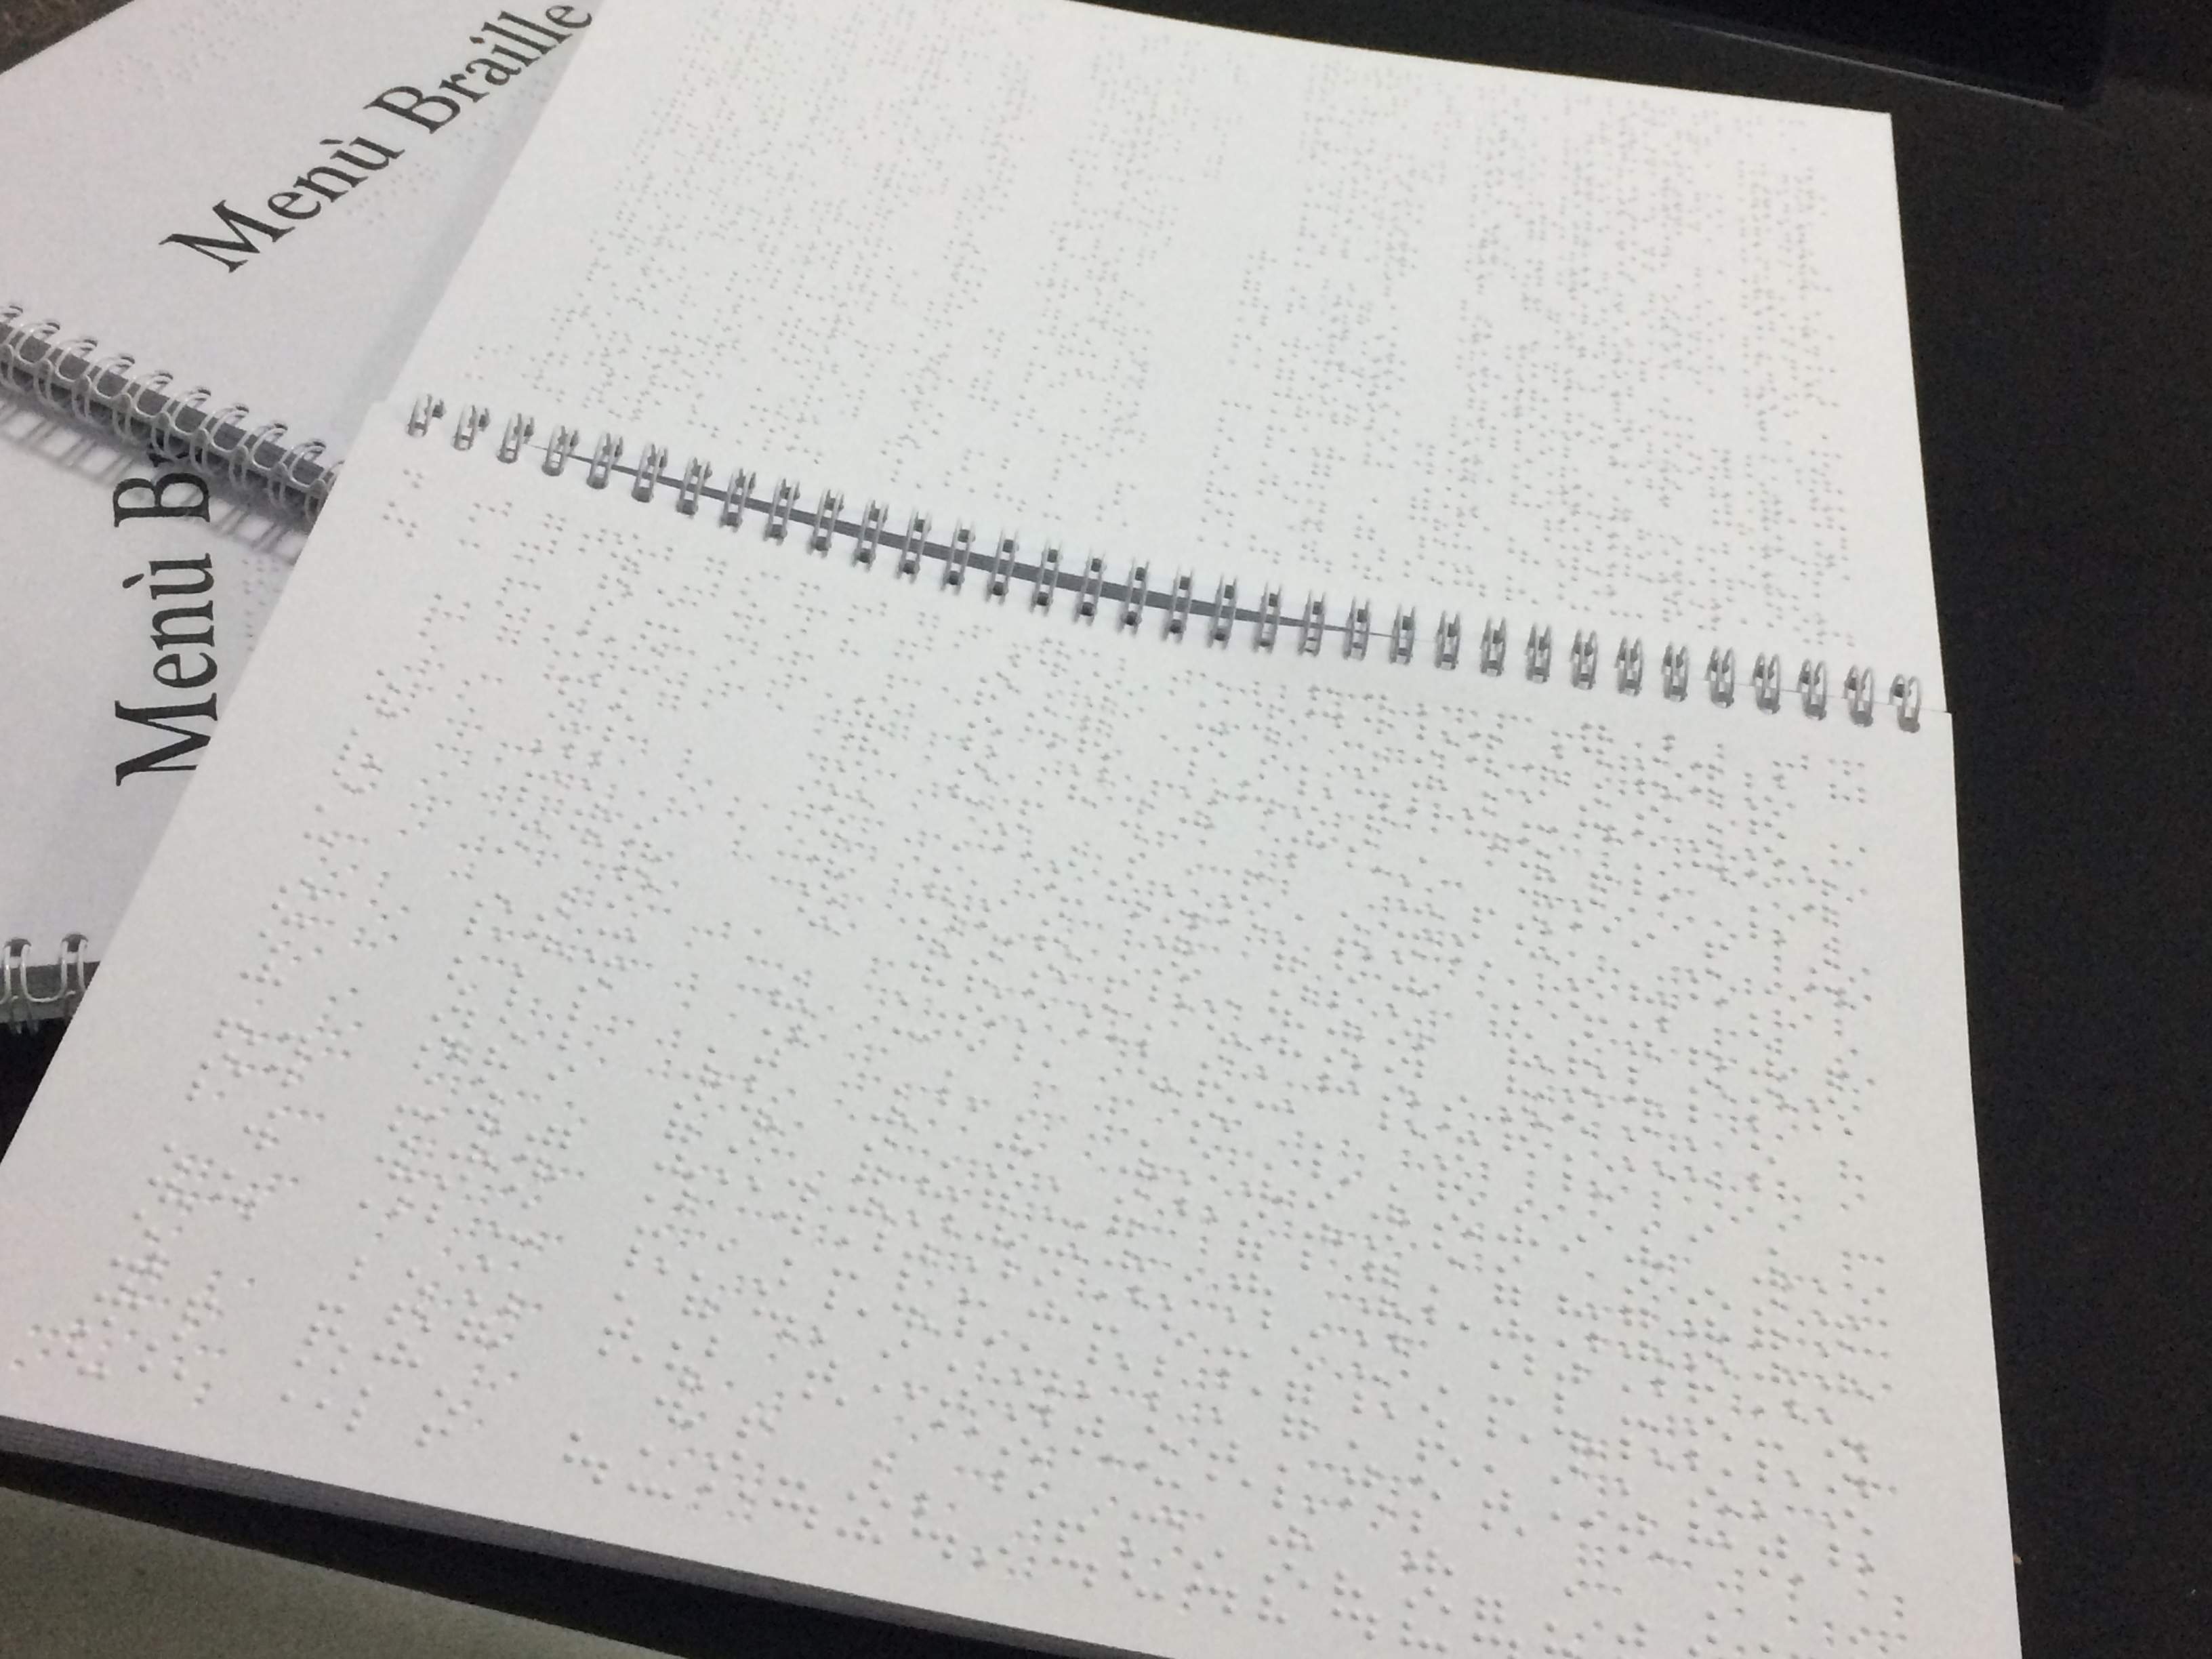 Menù Braille